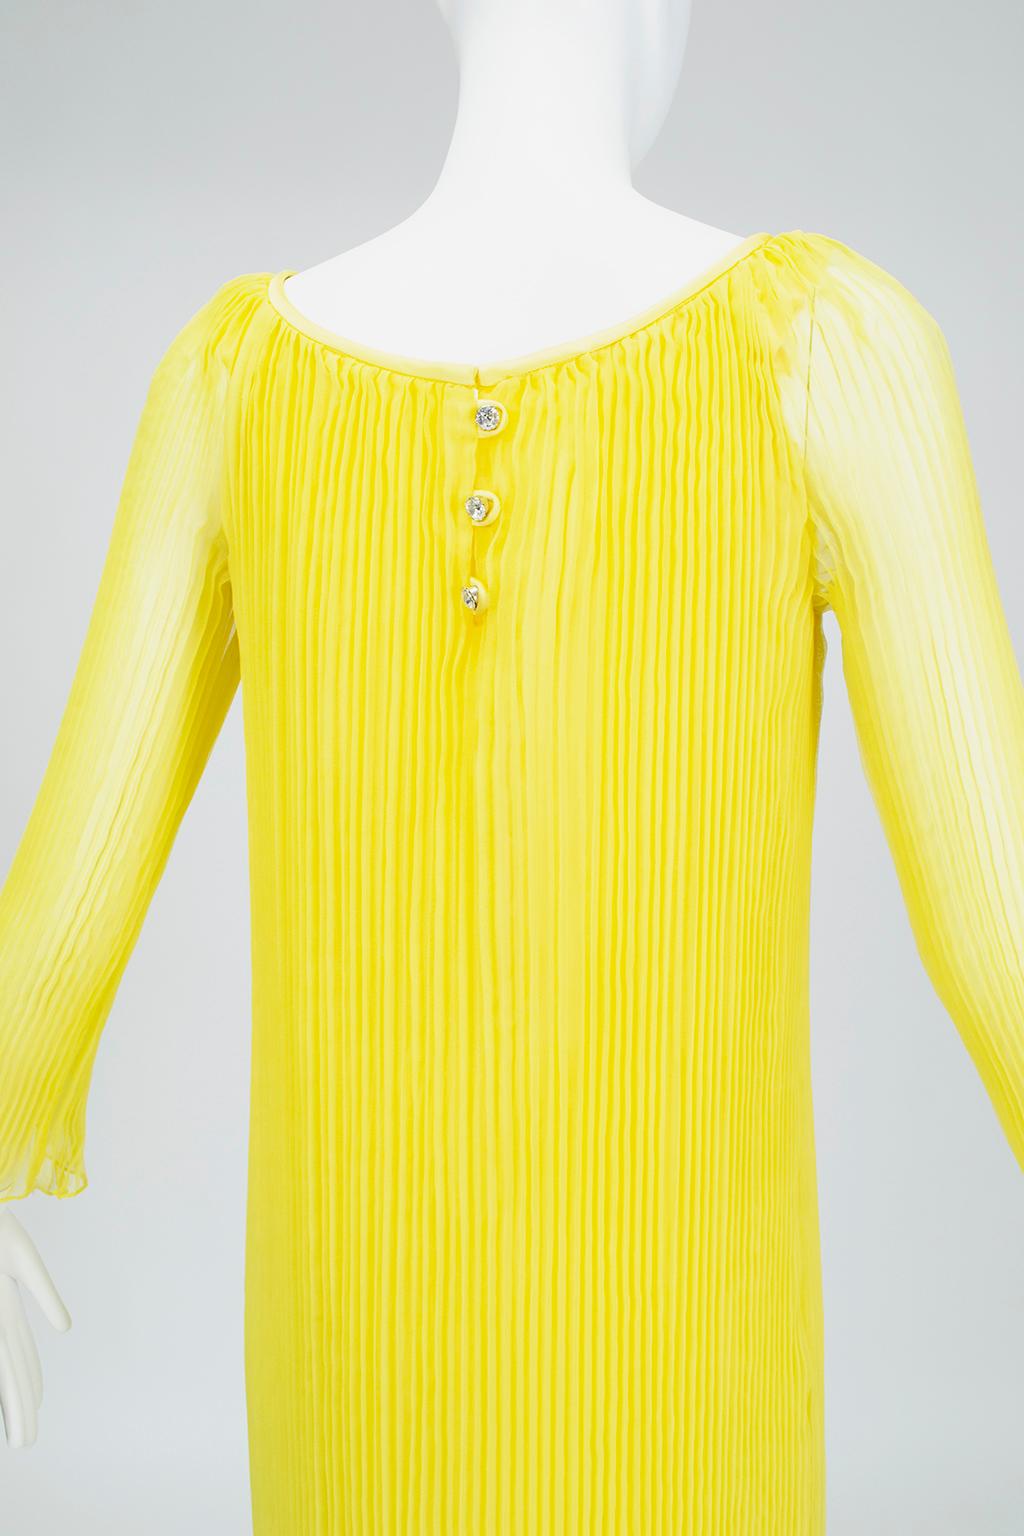 Sheer Yellow Jeweled Plissé Tunic and Cigarette Pant Ensemble – XS, 1960s For Sale 1